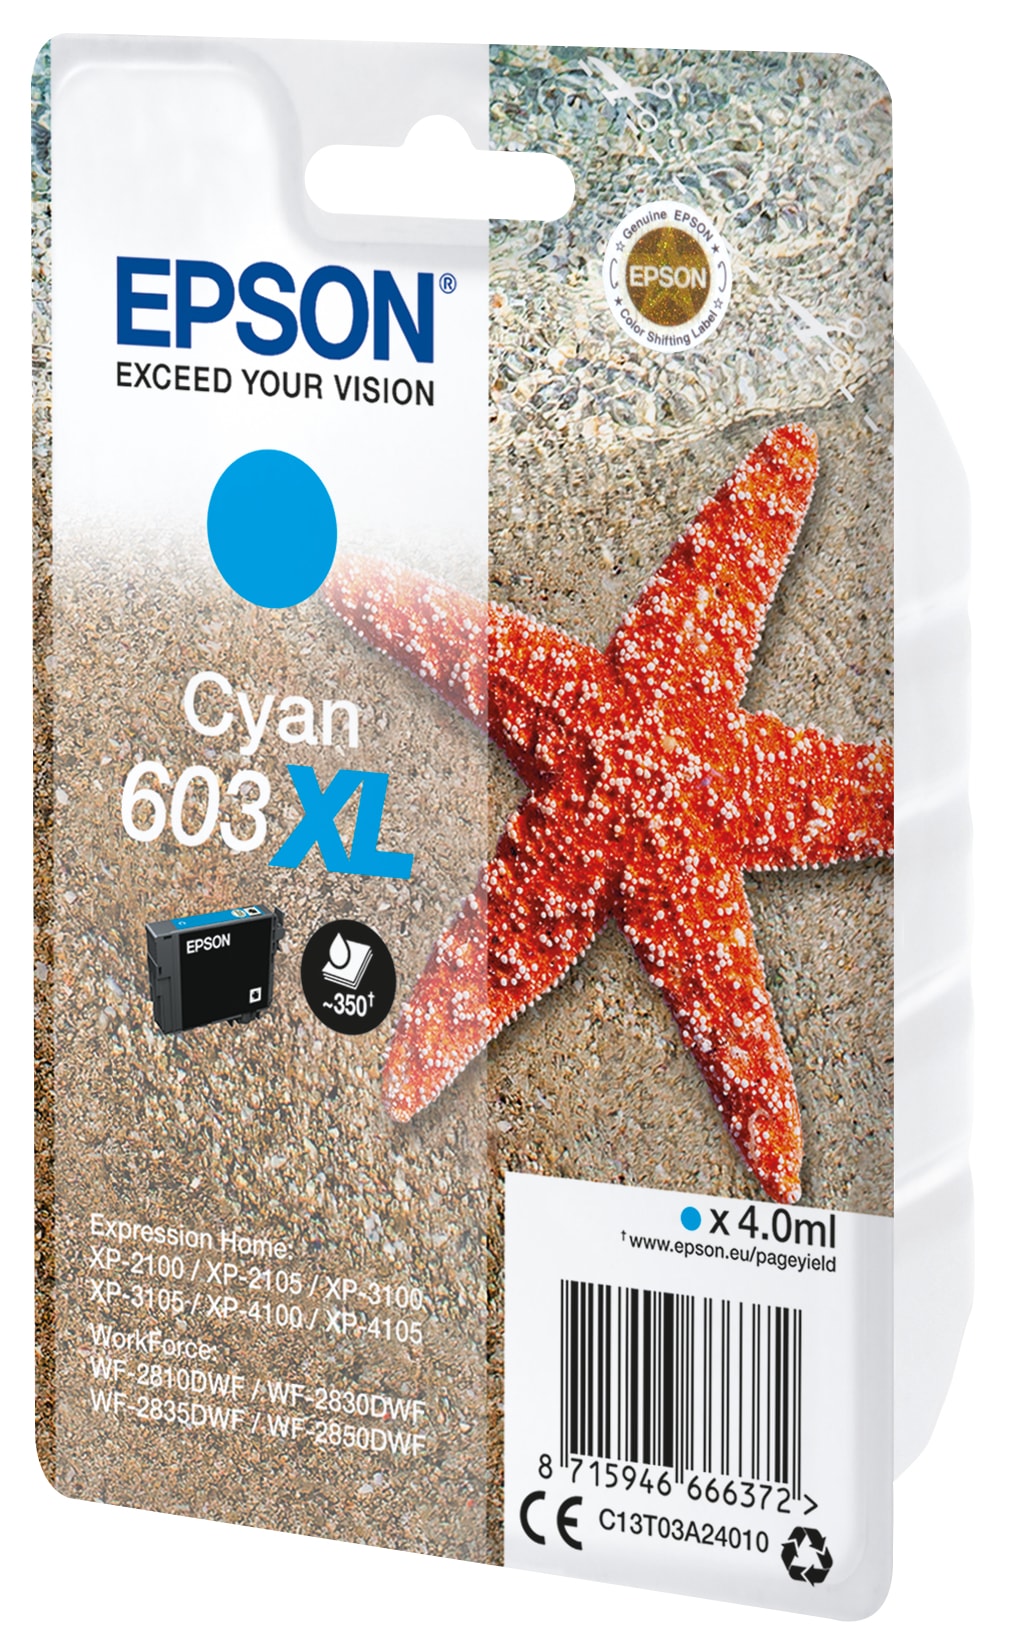 Epson Tintenpatrone »Epson Singlepack Cyan 603XL Ink«